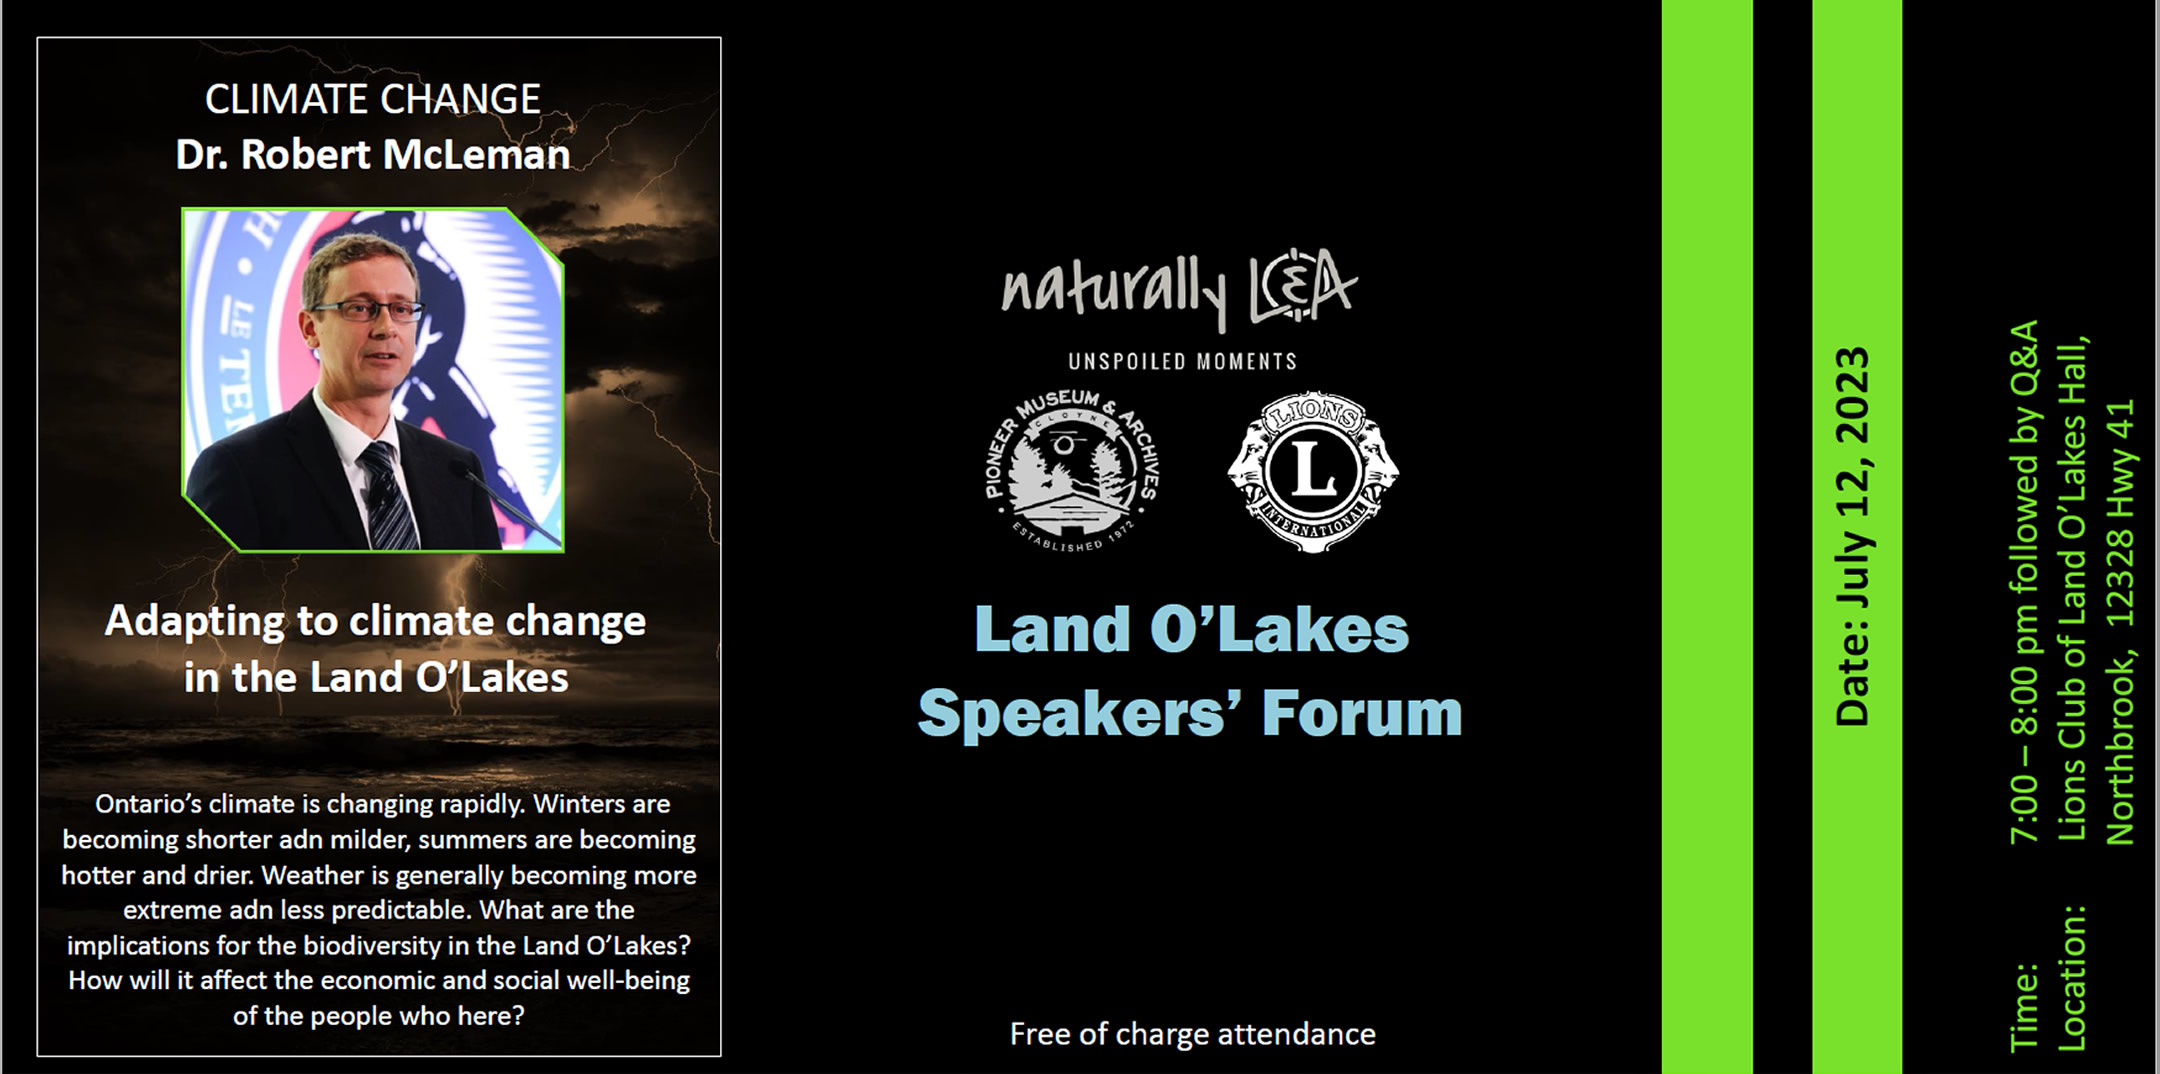 Dr. Robert McLeman - Land O' Lakes Speakers' Forum